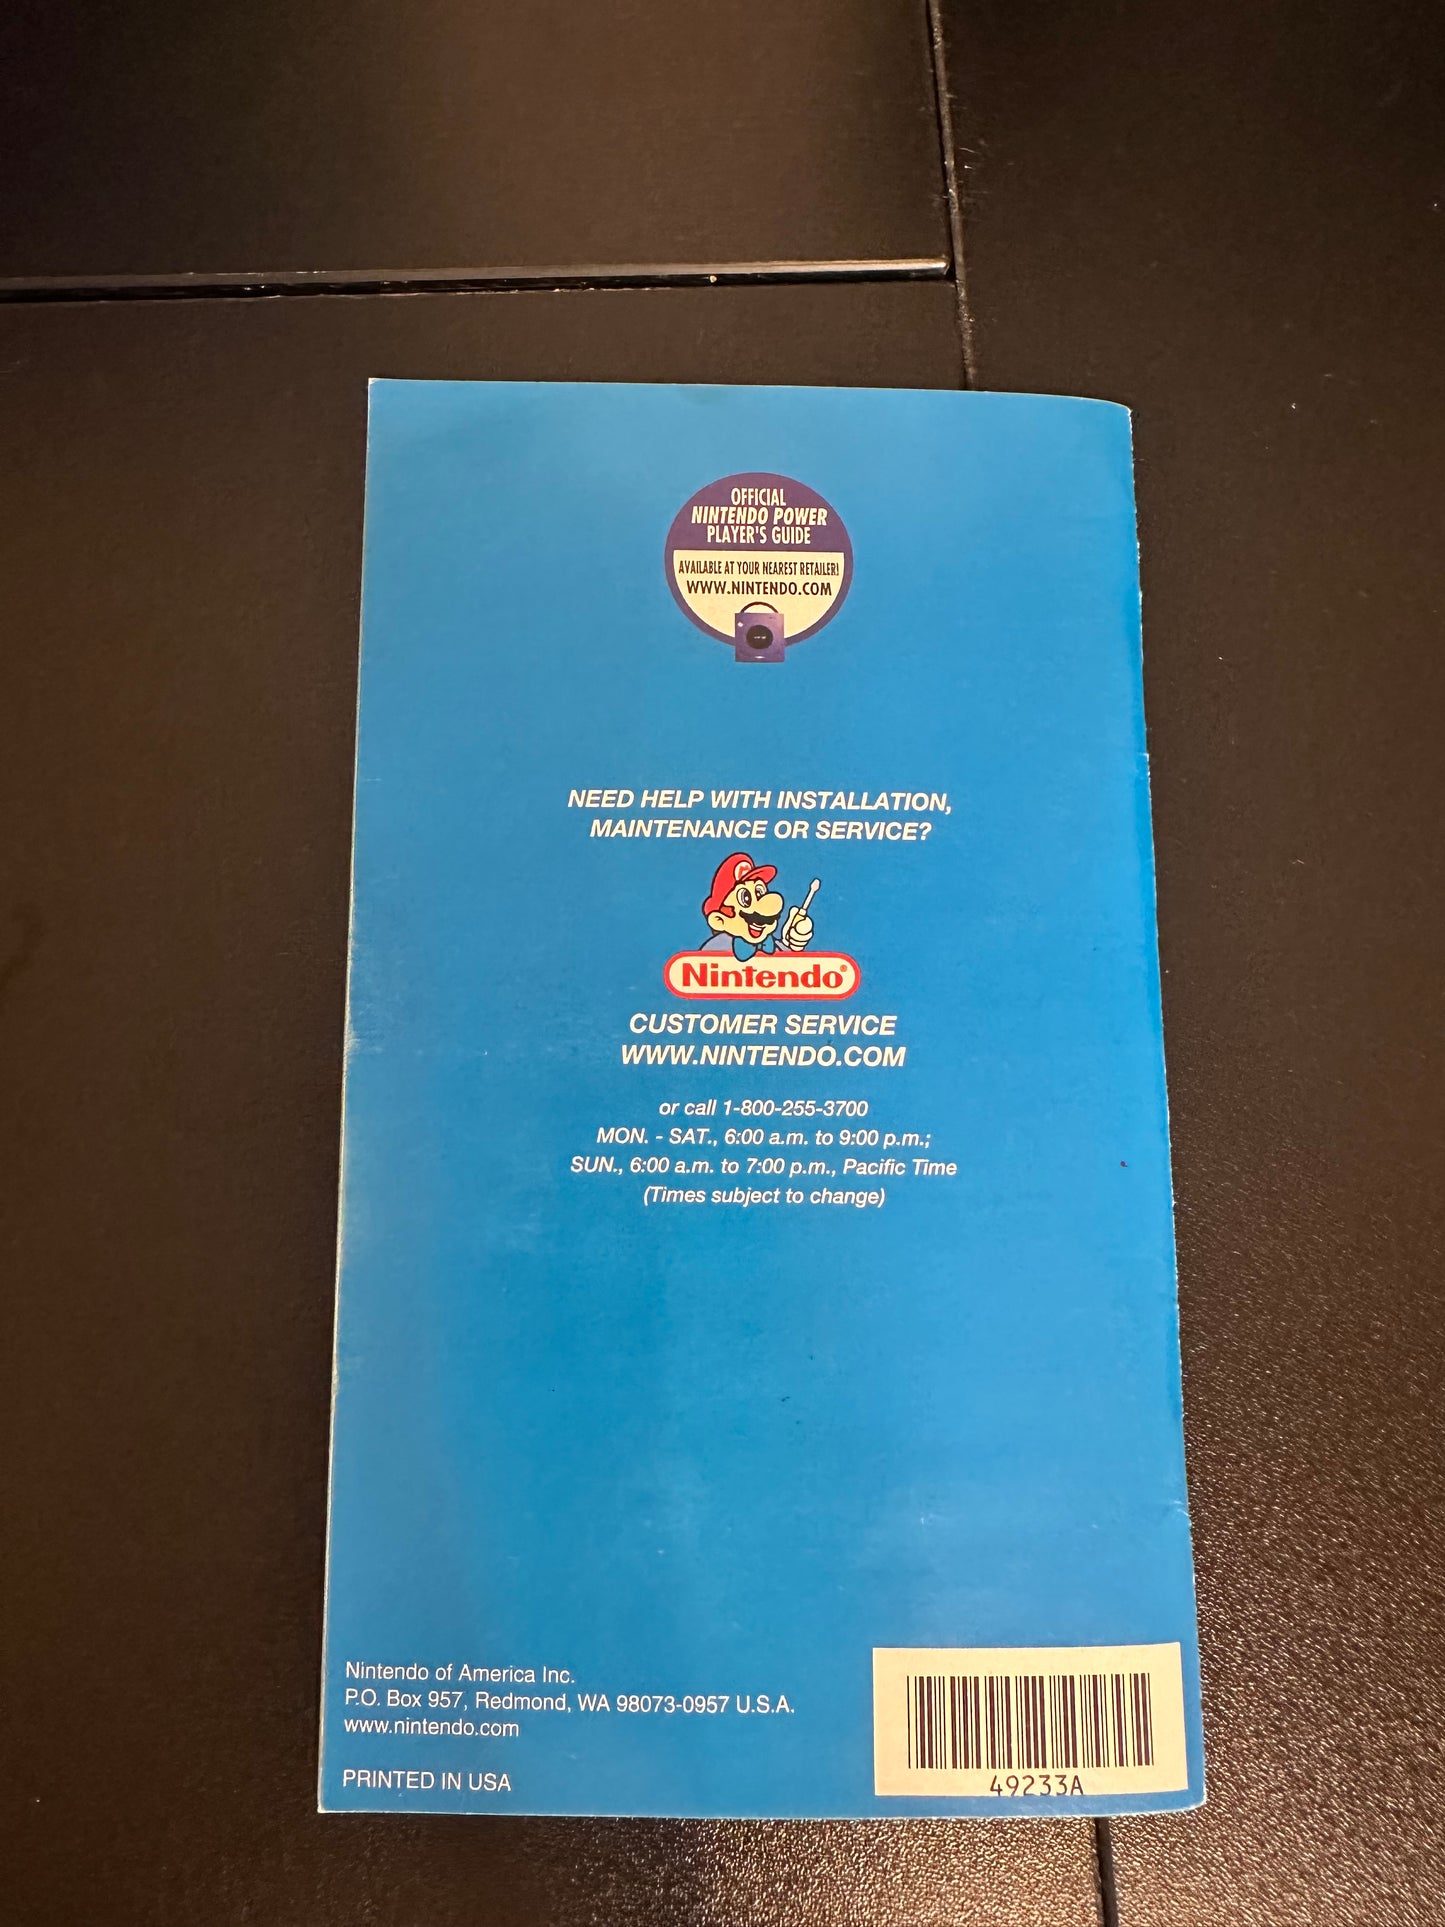 Mario Party 4 Nintendo GameCube Manual